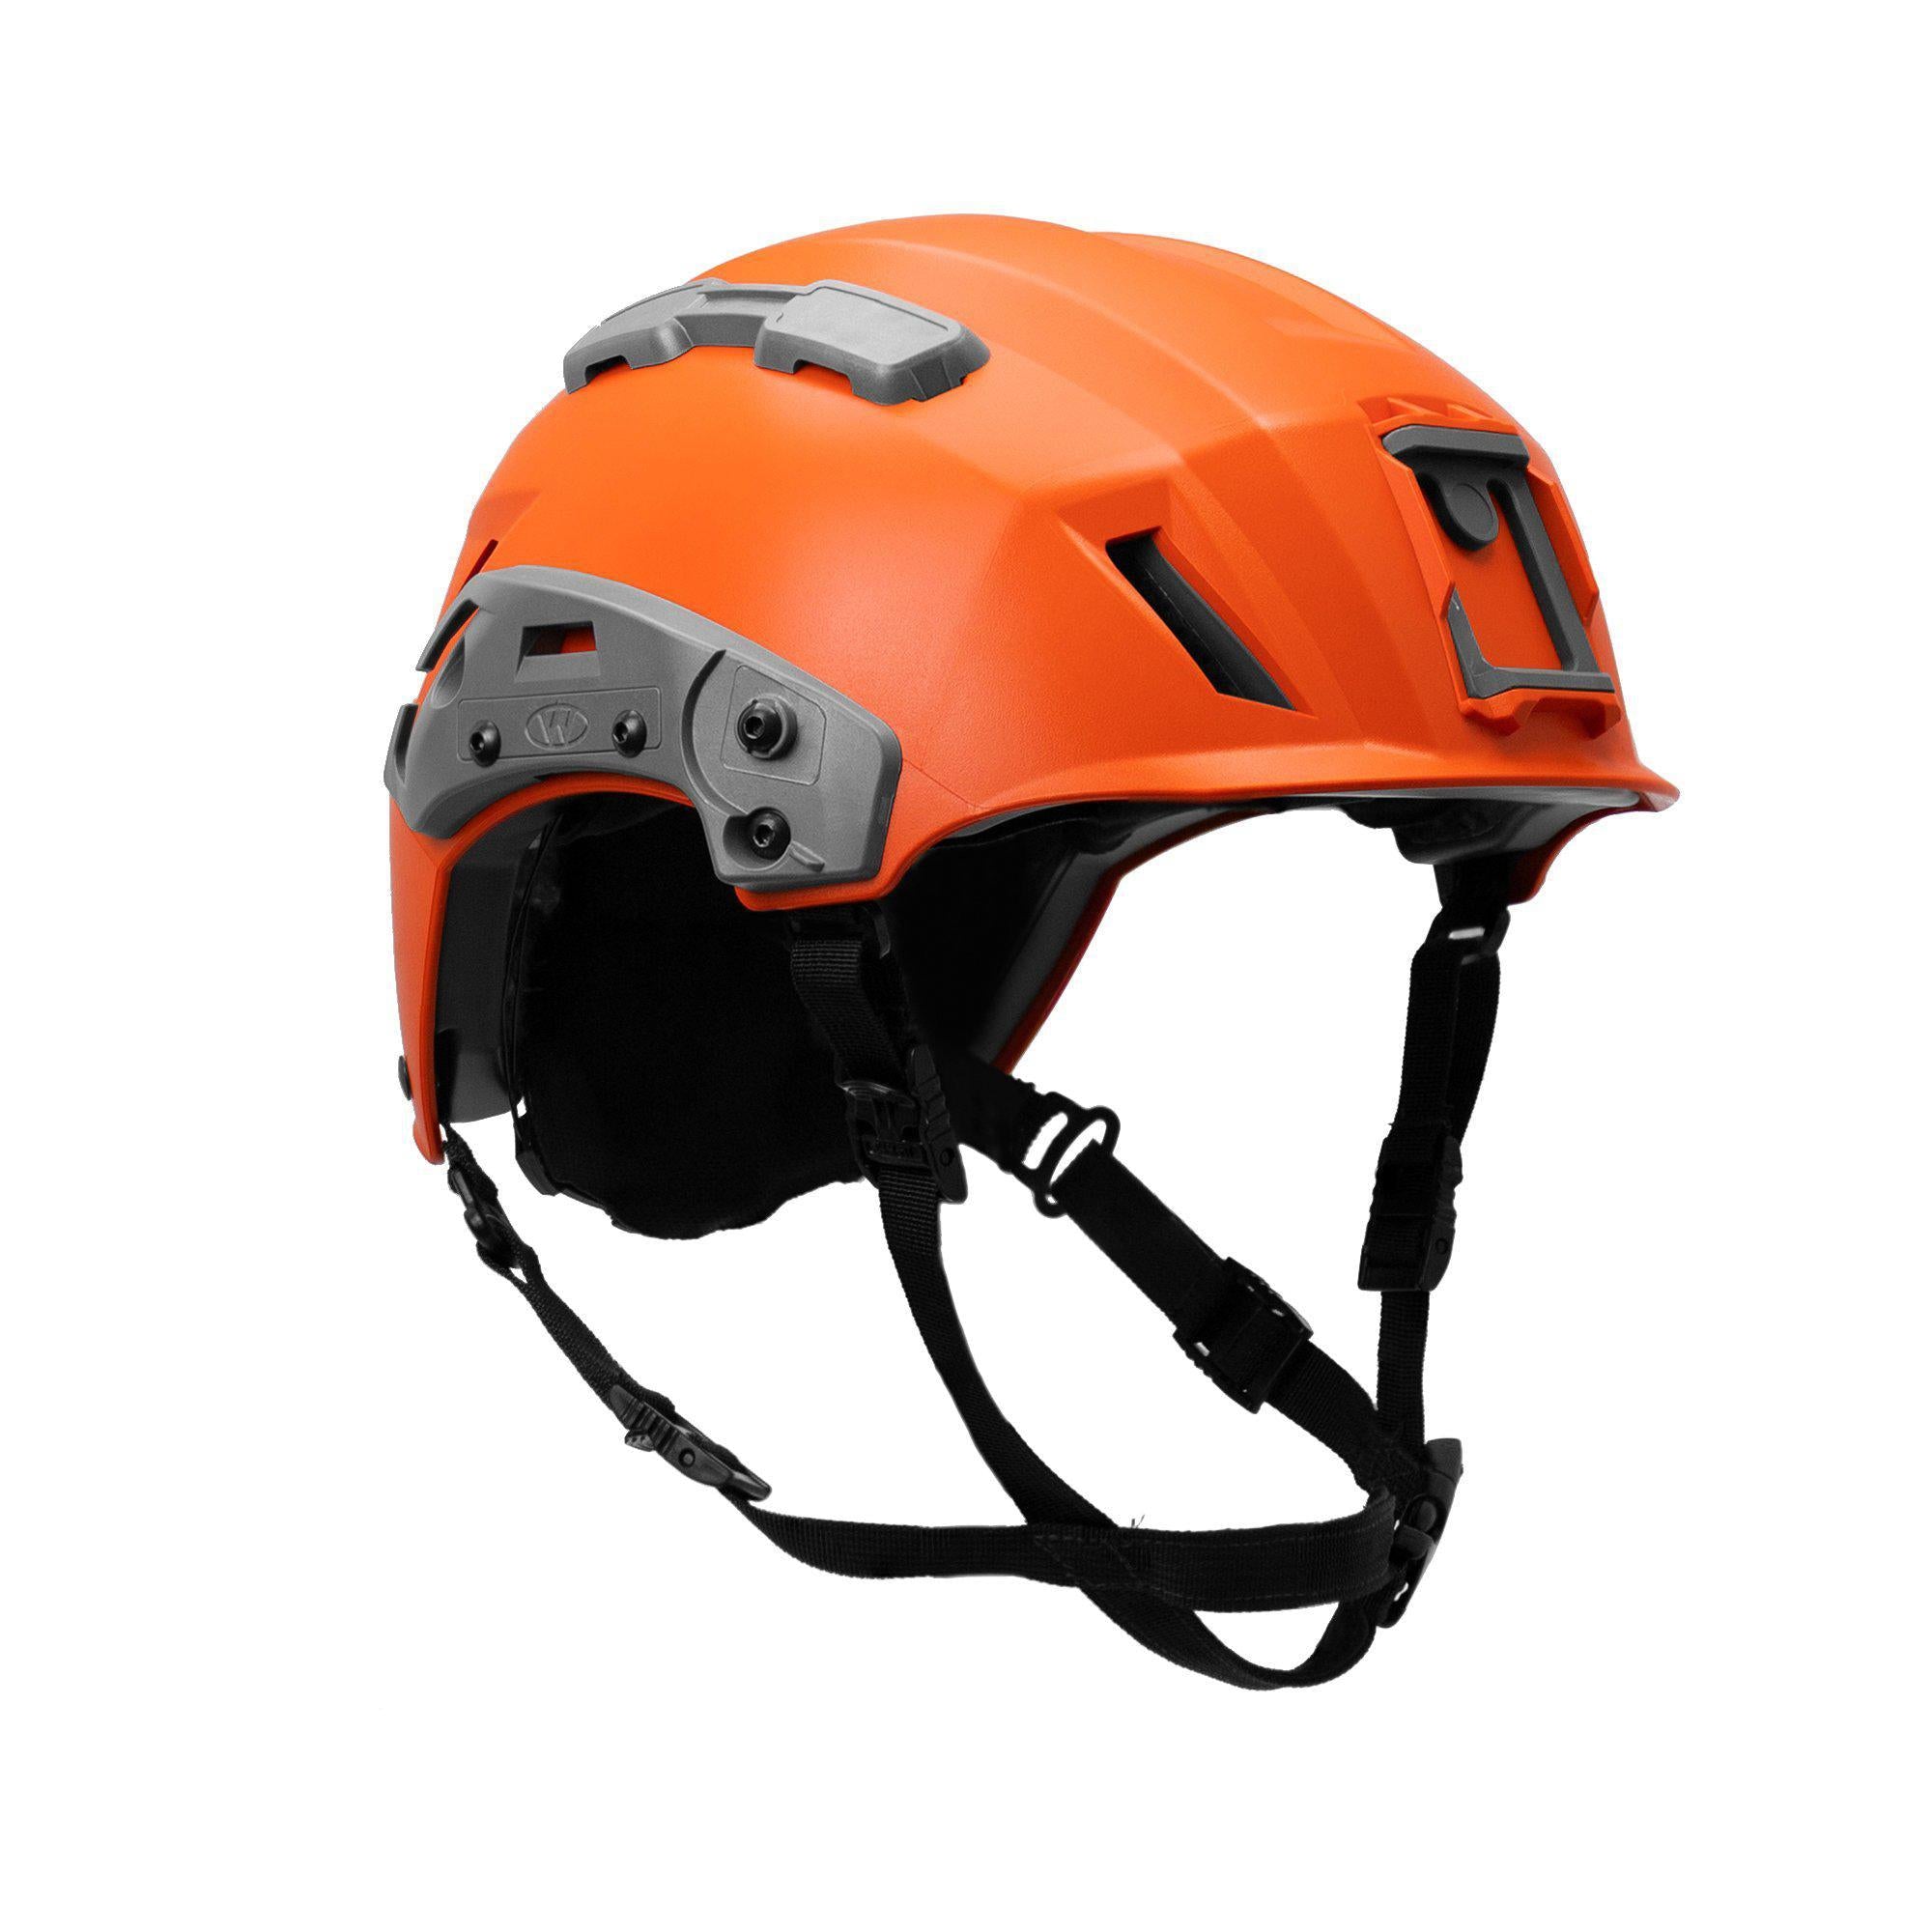 EPIC Air® Combat Helmet Liner System